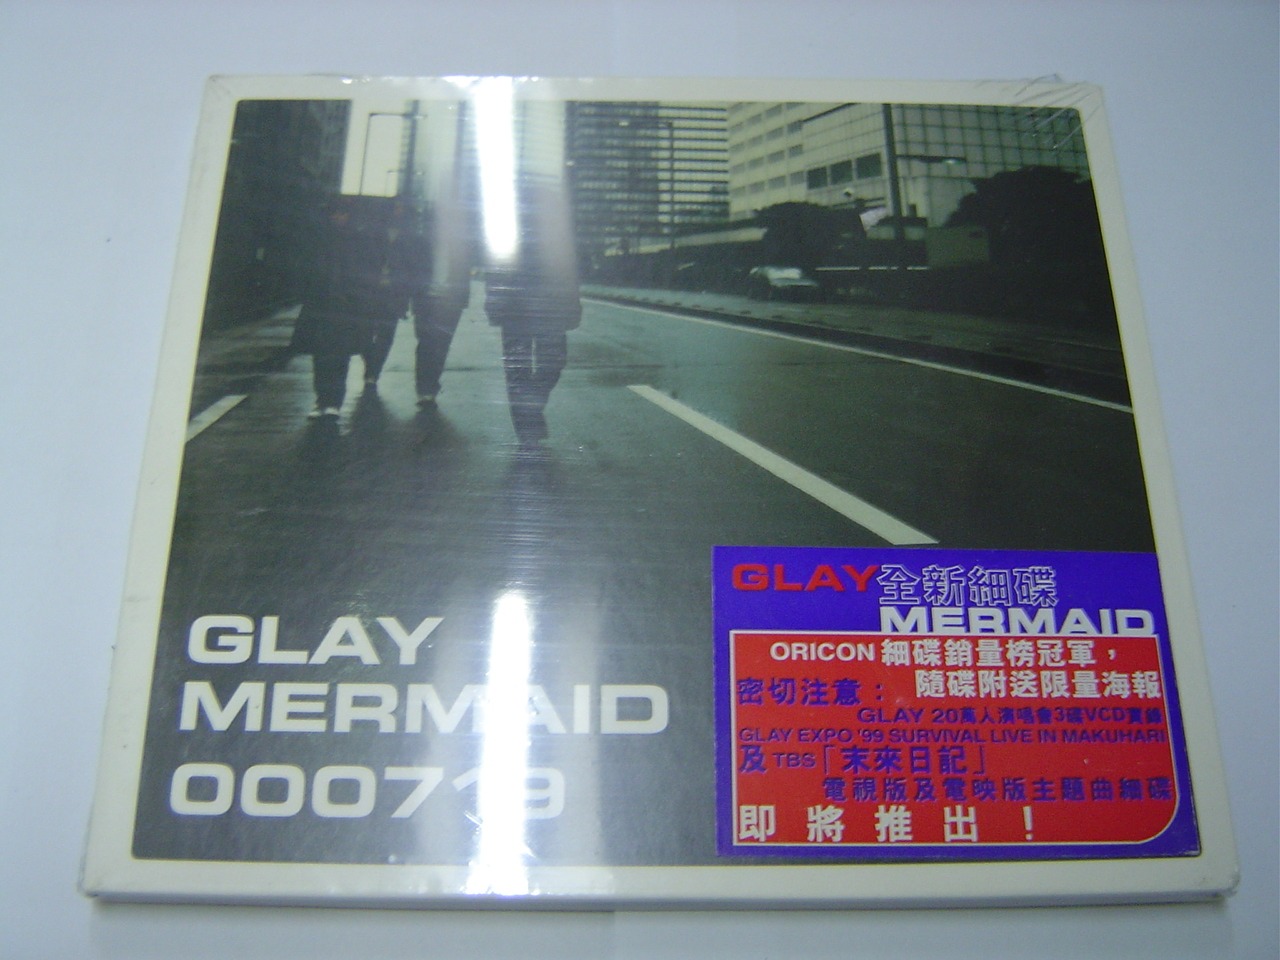 Glay Mermaid 000719